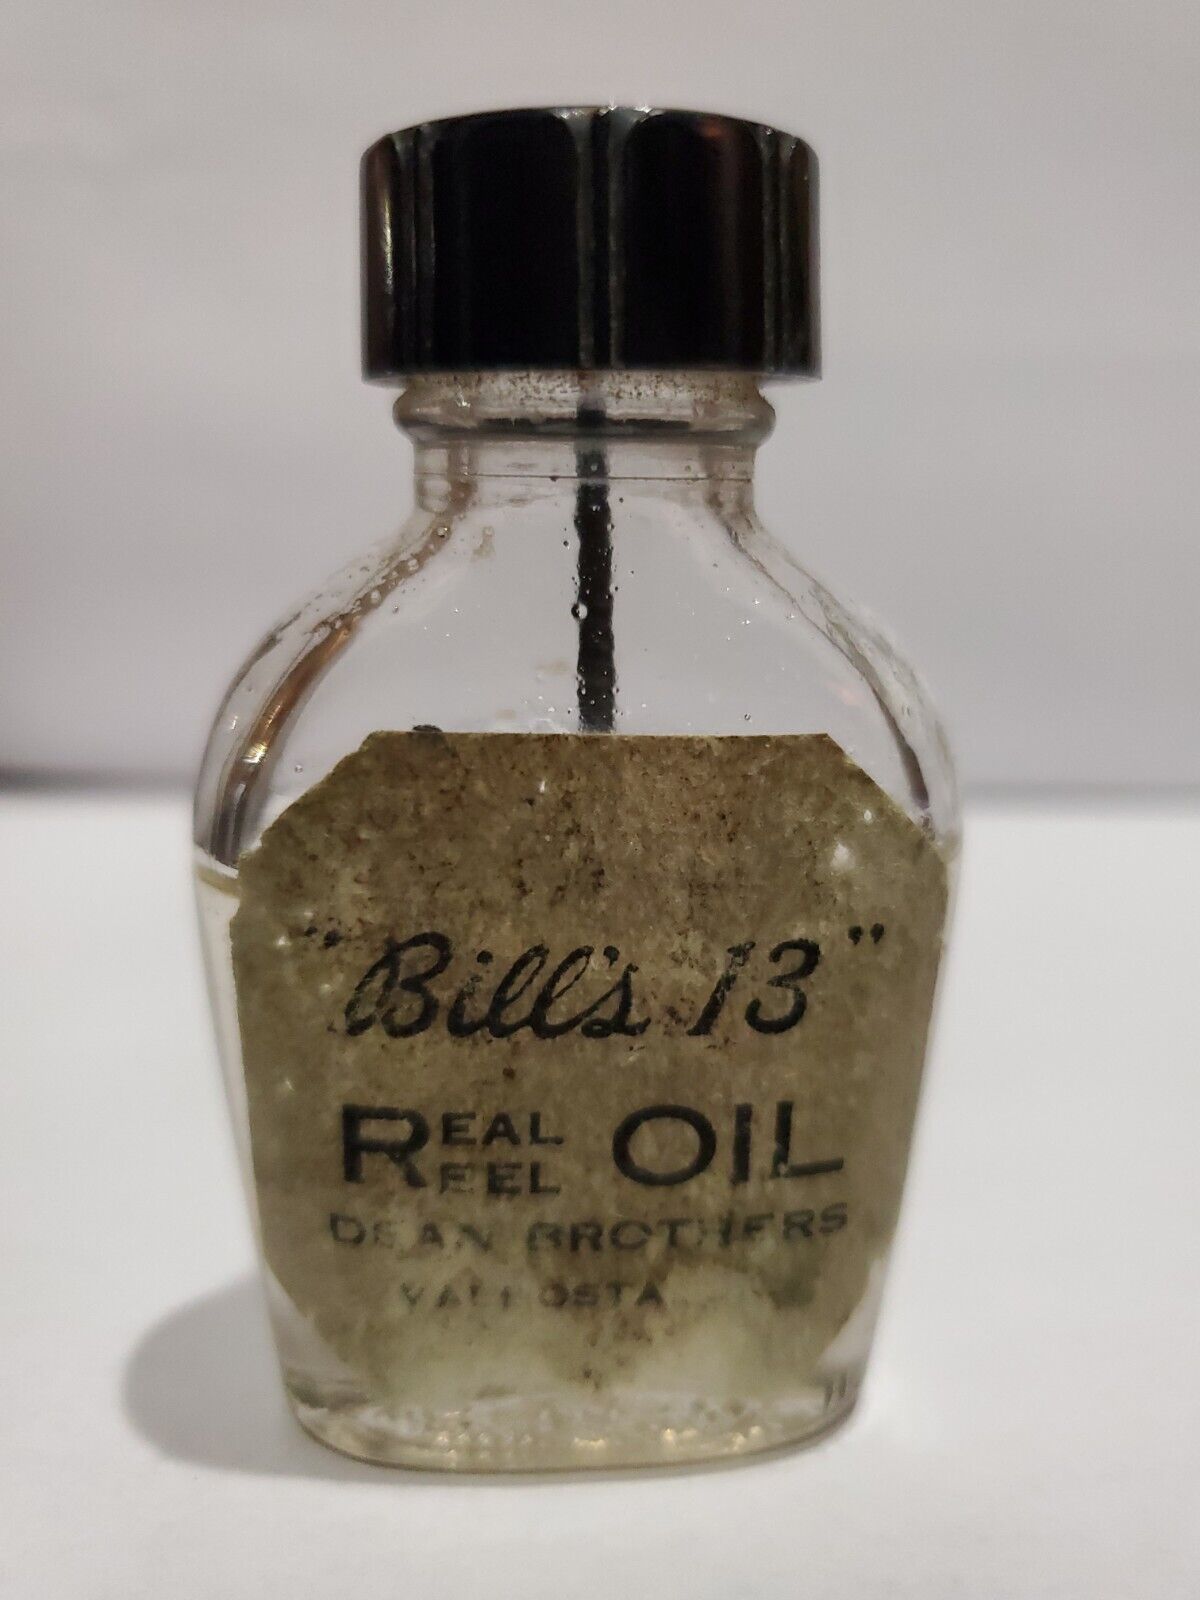 Bottle: Clear Glass, "bill's 13" Real Reel Oil, Dean Brothers, Valdosta, Georgia